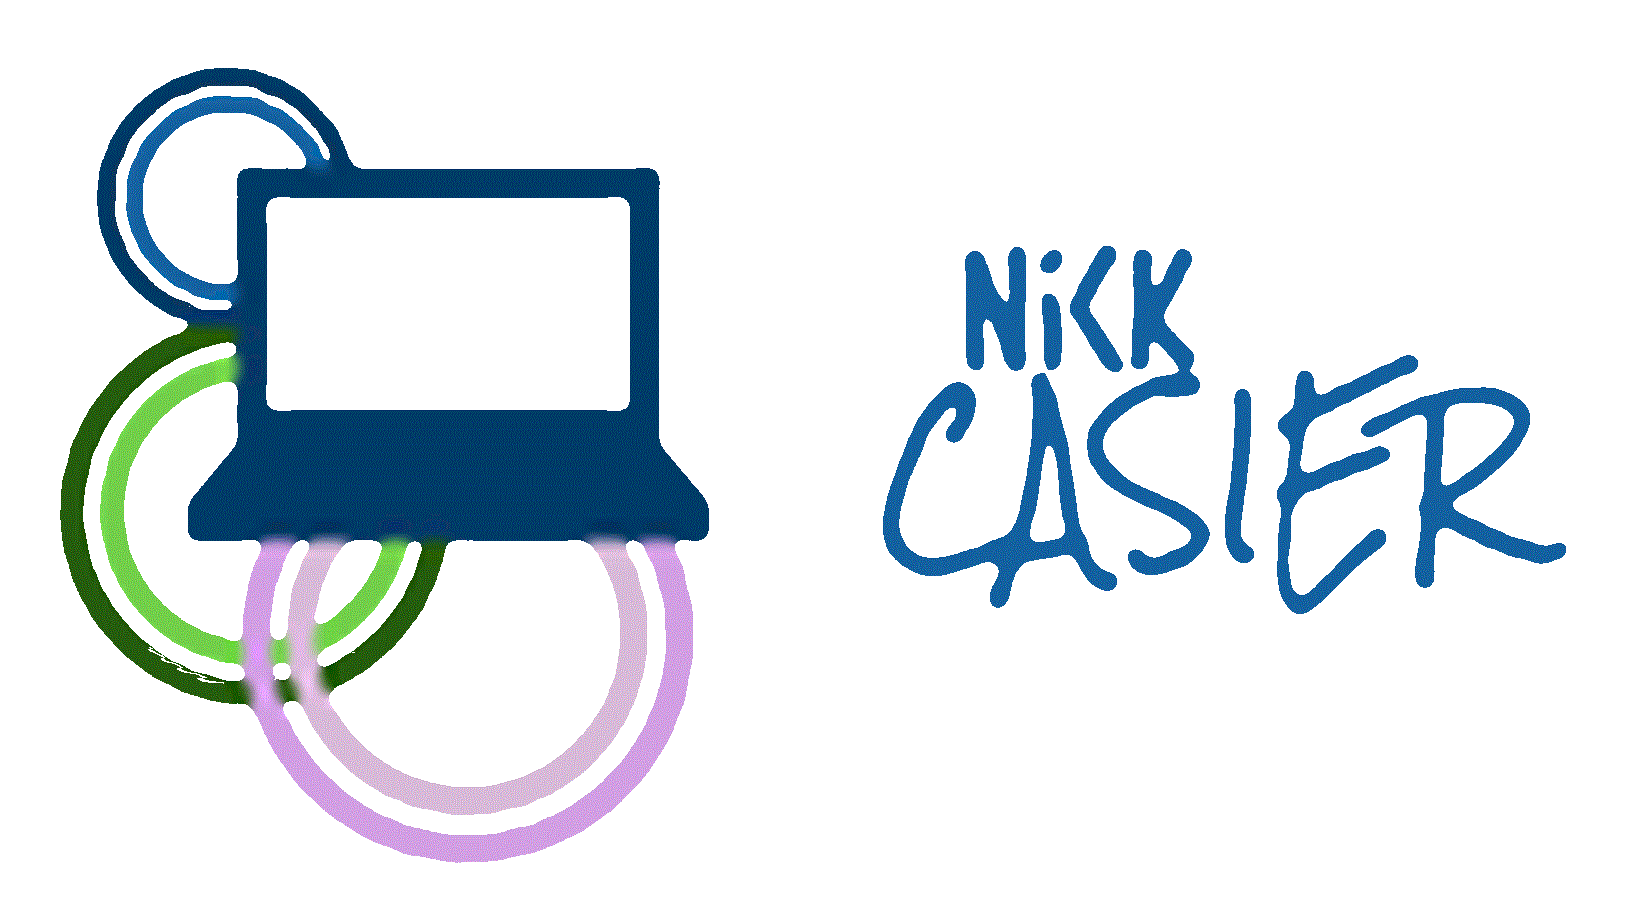 Logo Nick Casier Computer Solutions in kleur